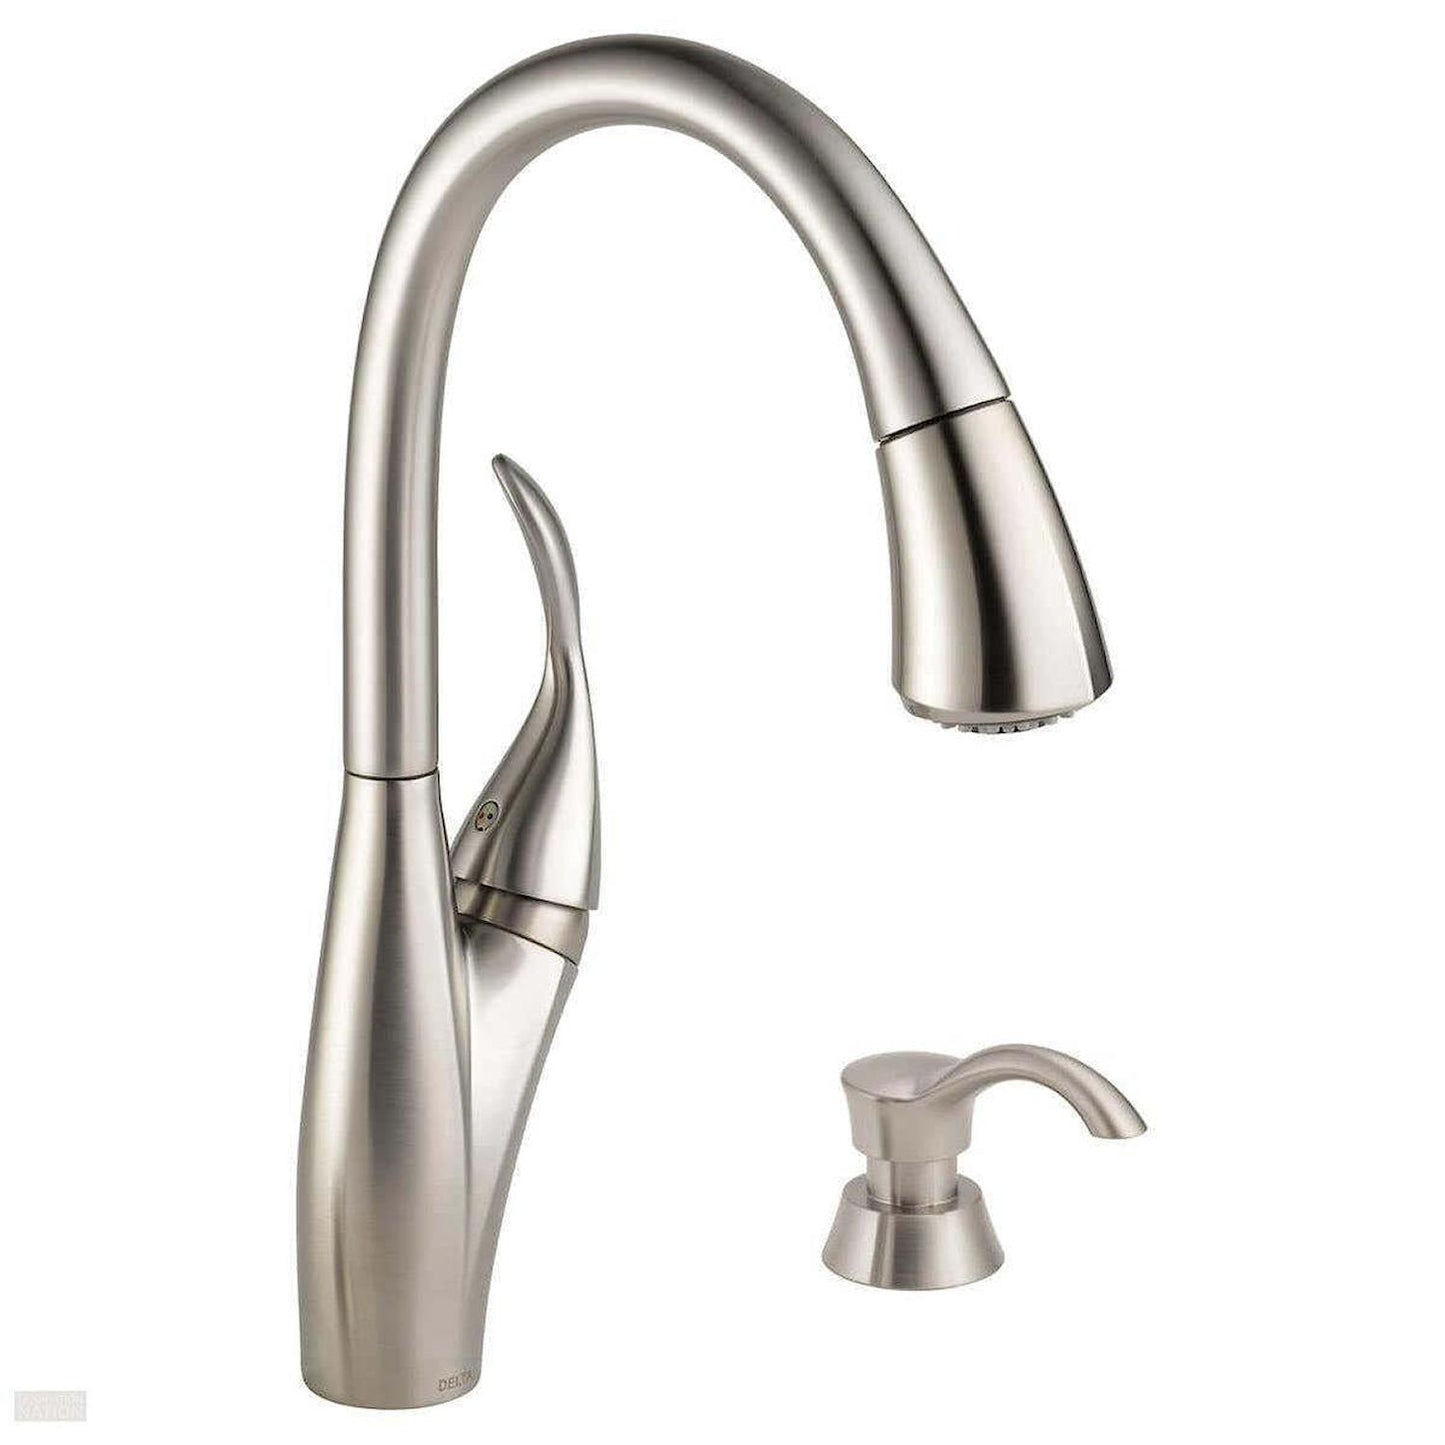 Delta Berkley Single Handle Pull-down Kitchen Faucet with MagnaTite and Soap Dispense